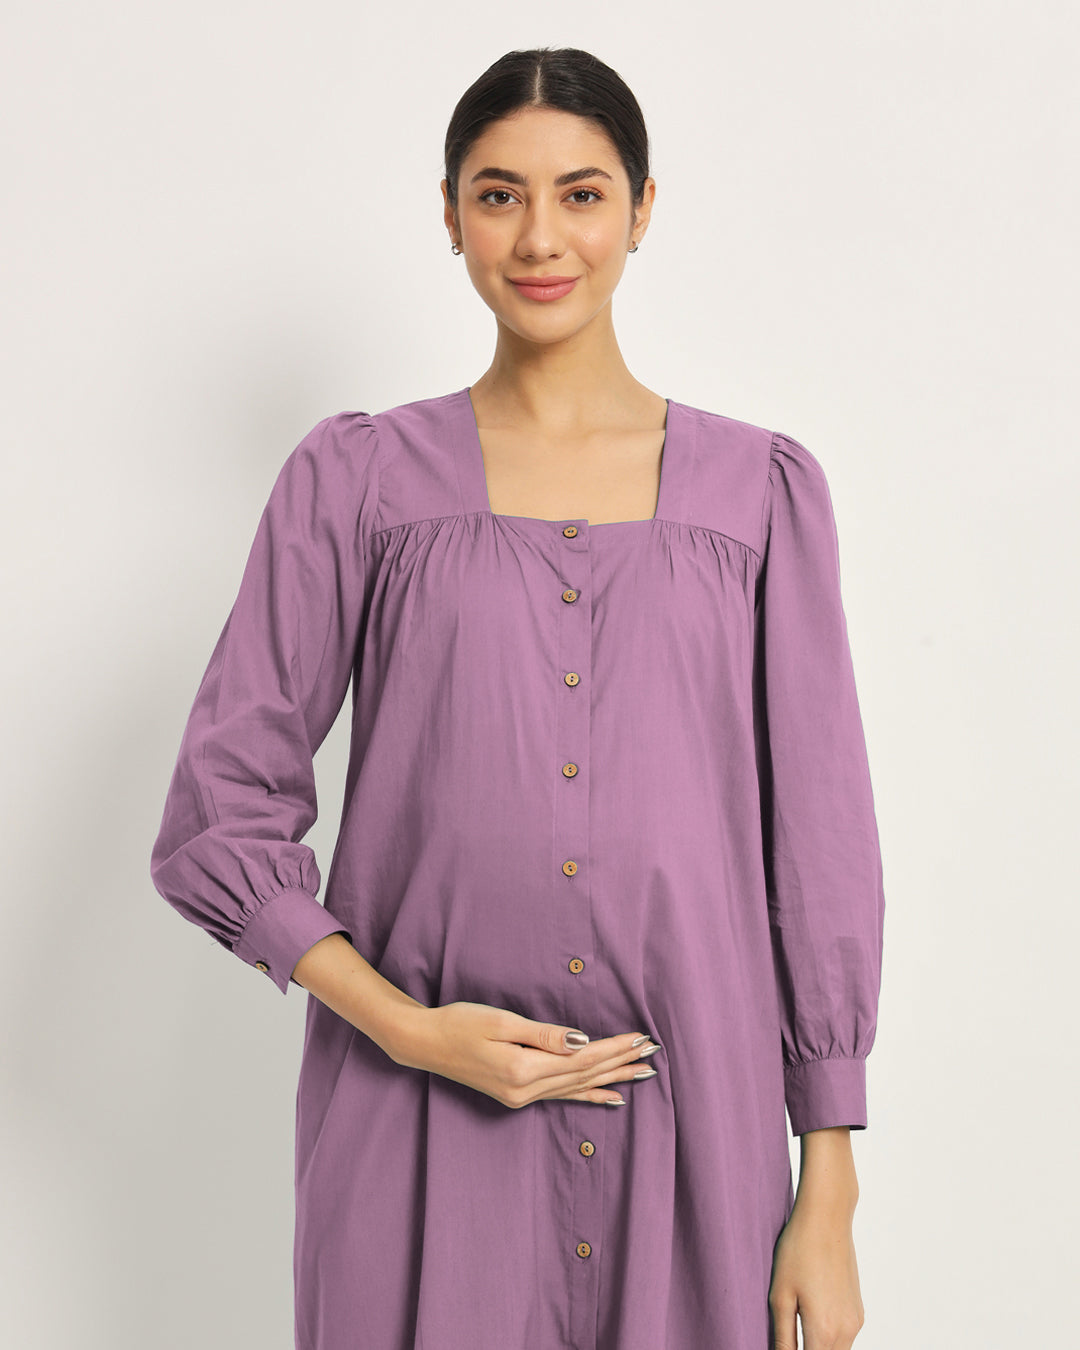 Iris Pink Belly Blossom Maternity & Nursing Dress